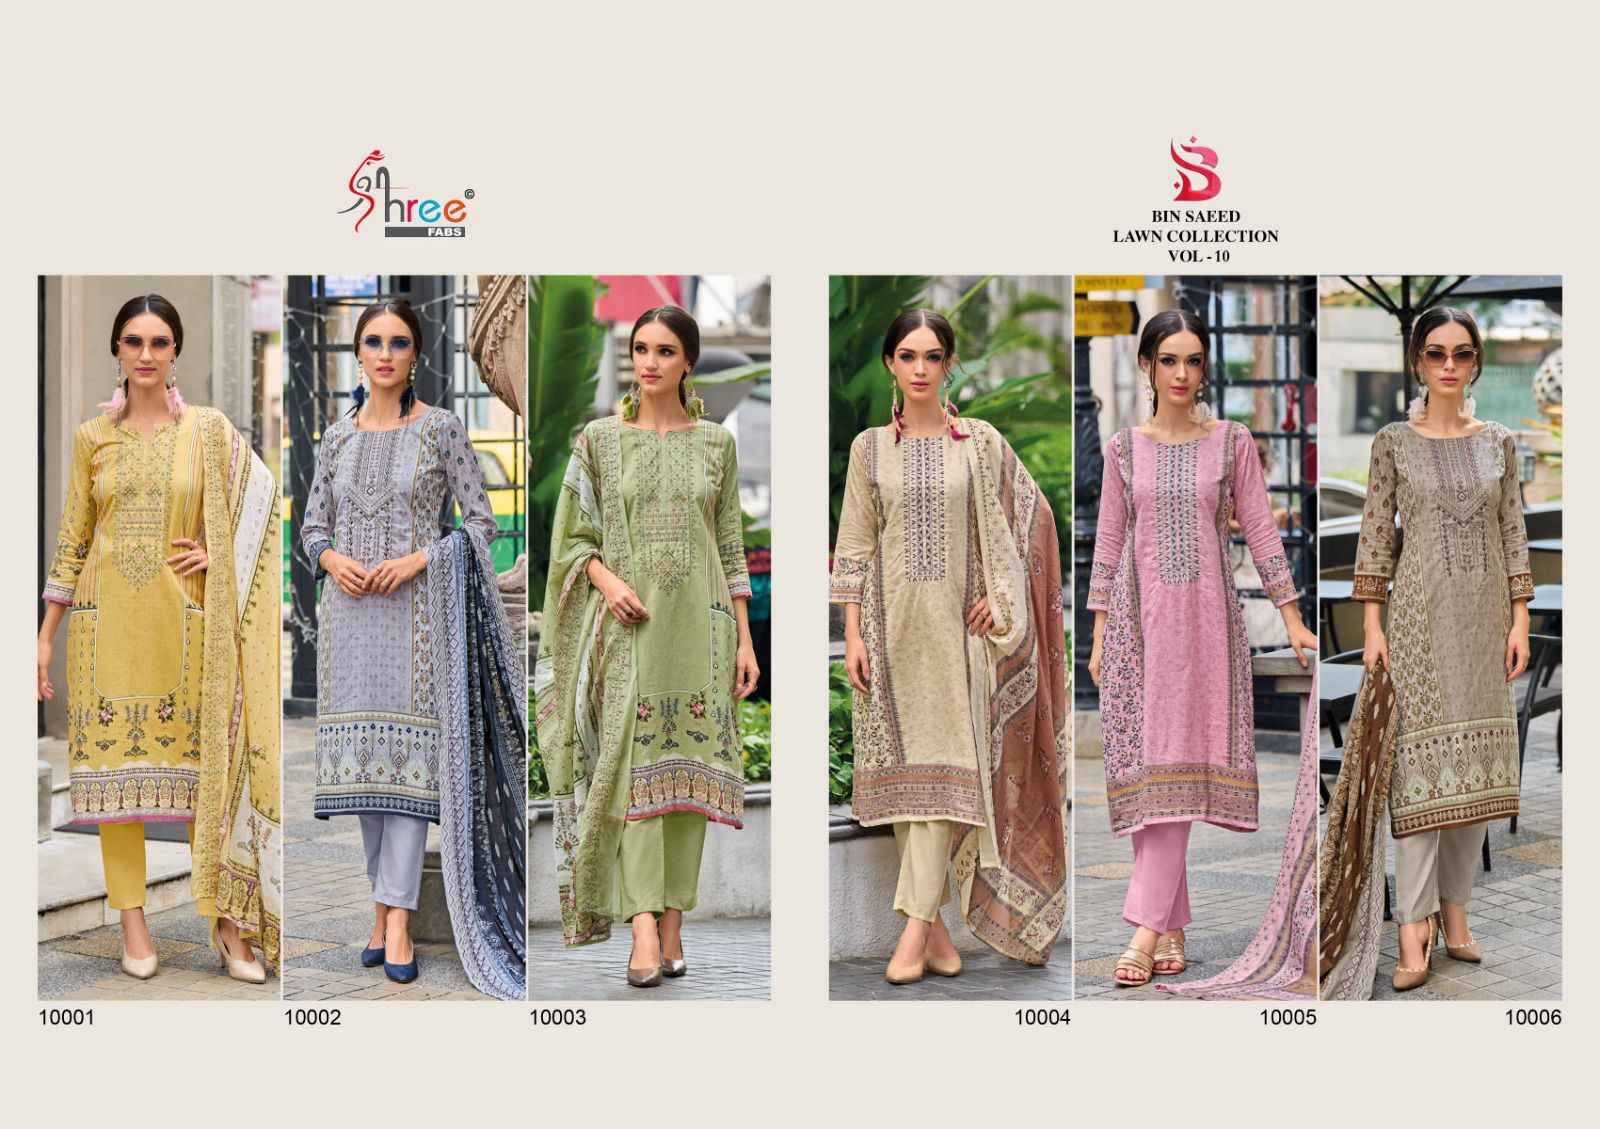 Shraddha Designer Bin Saeed Lawn Collection Vol-10 Cotton Dress Material (6 pc Cataloge)